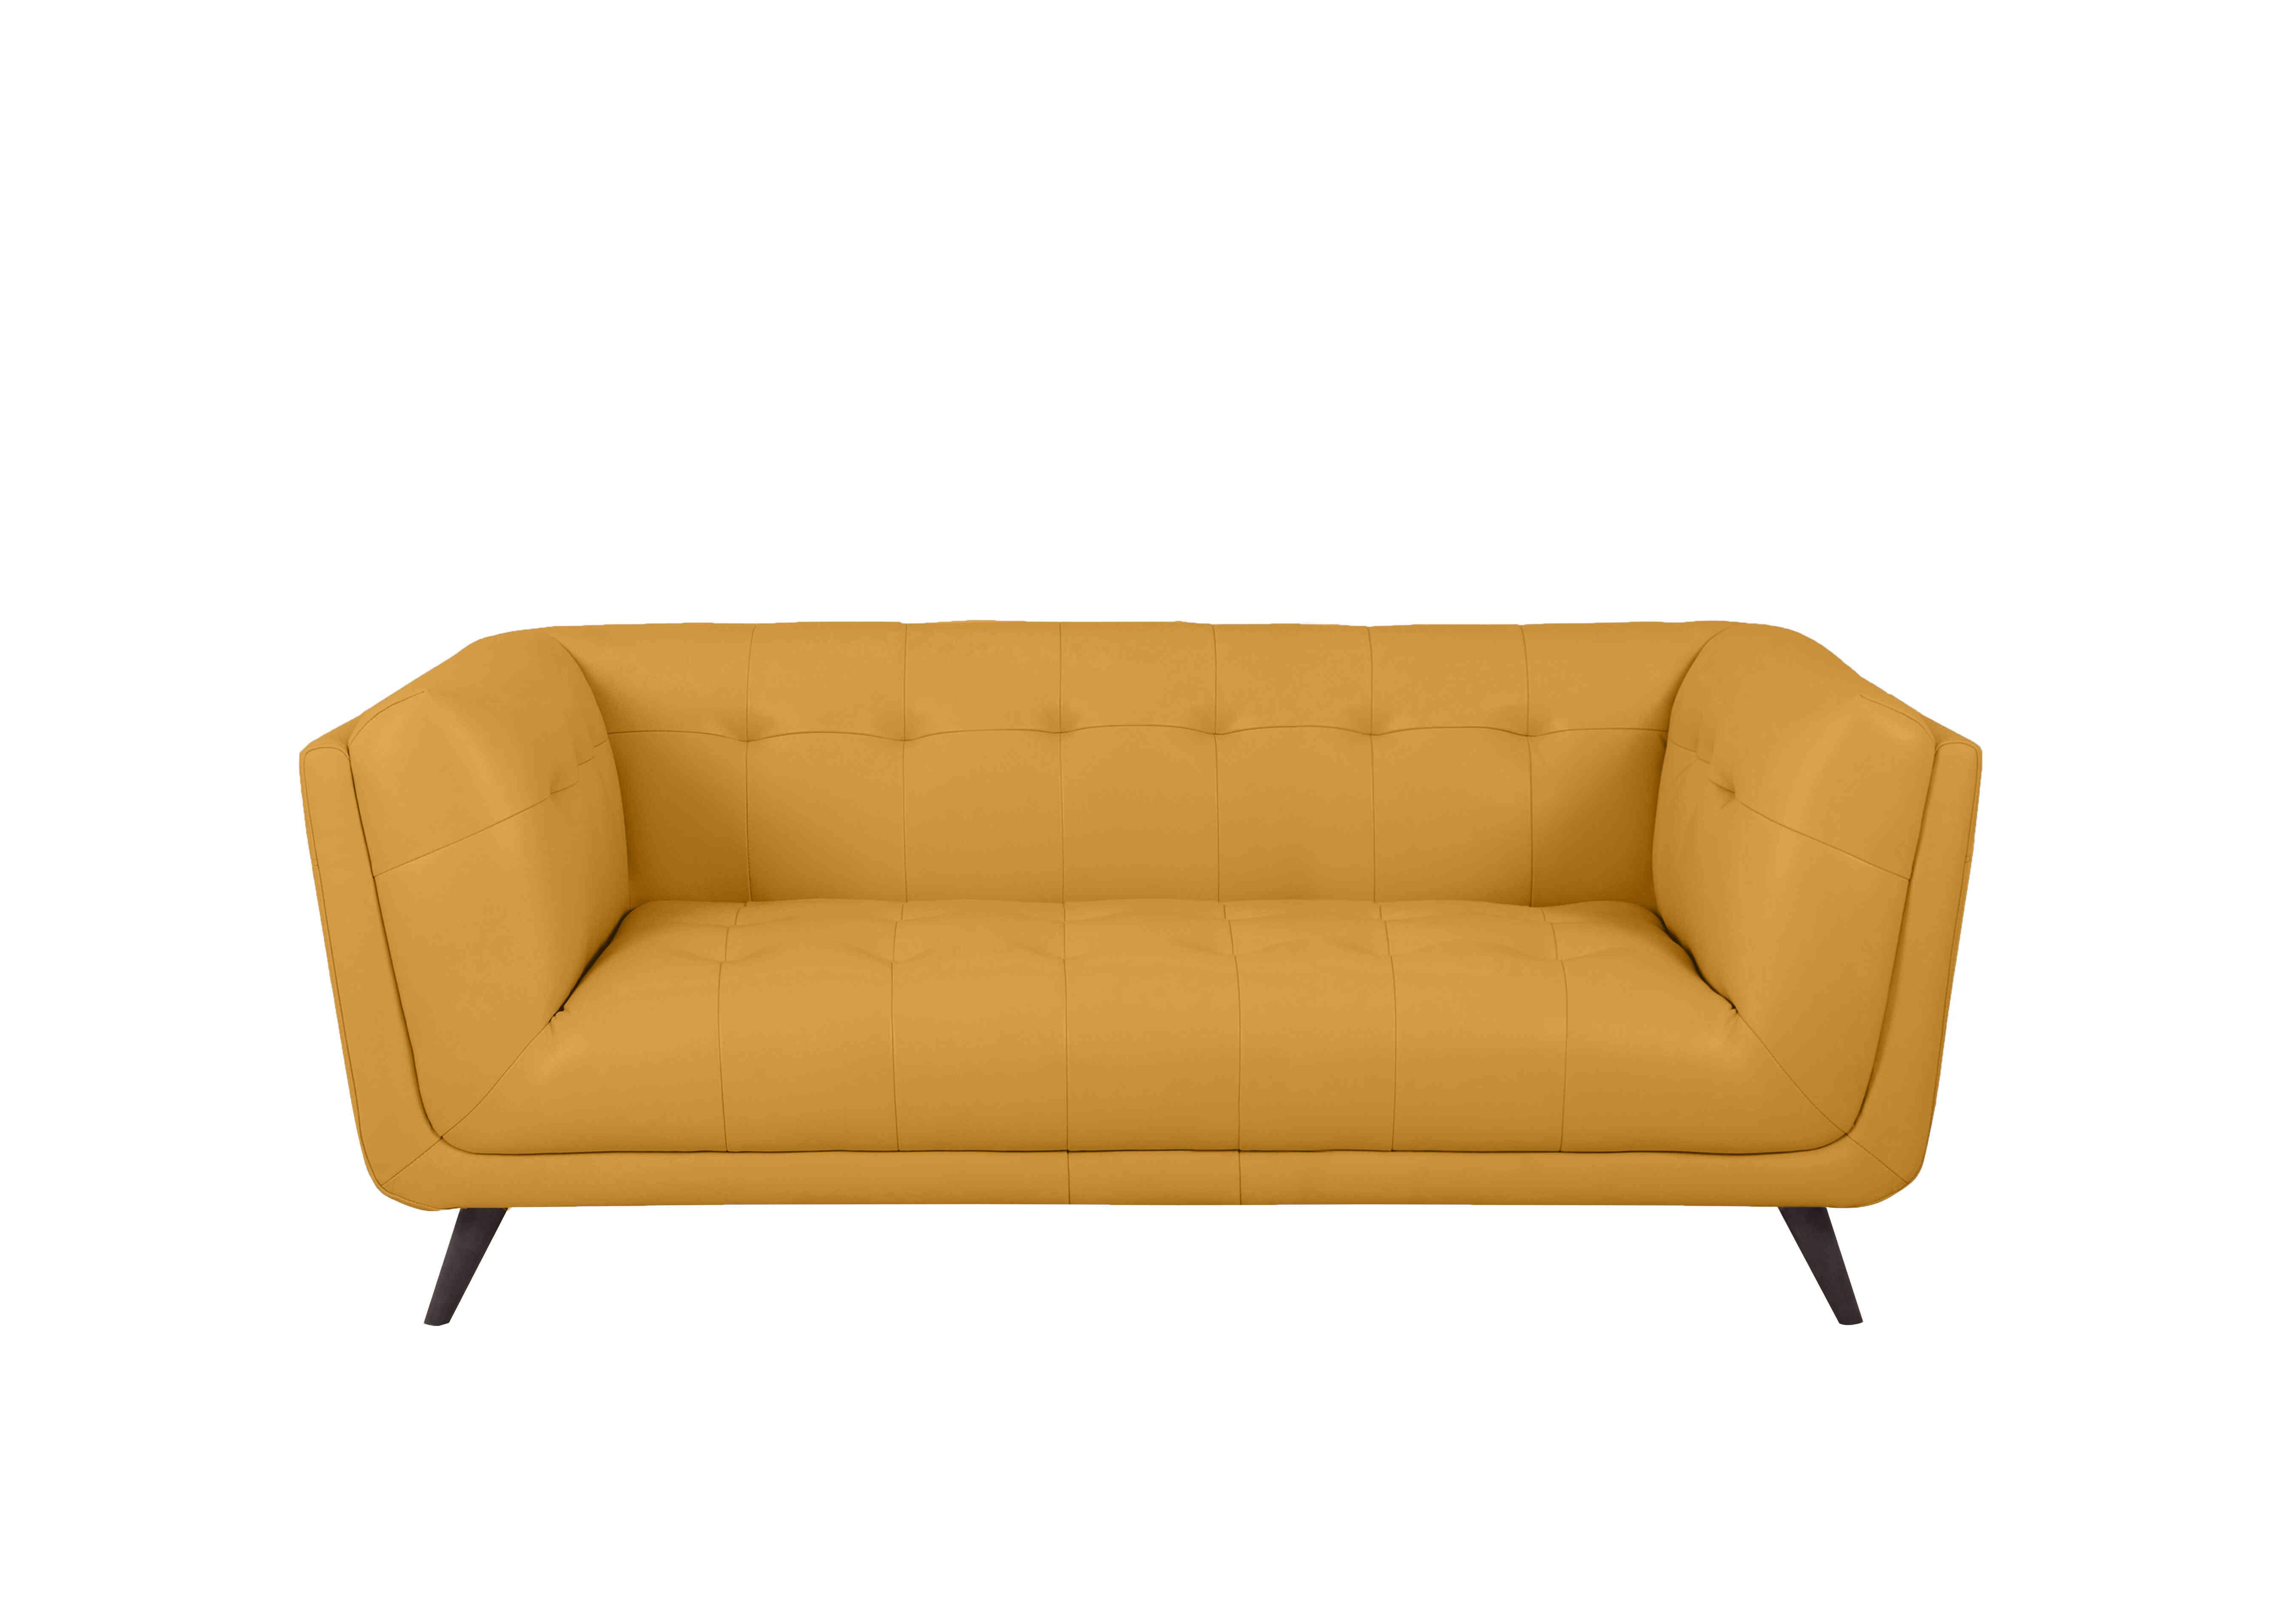 Rene Large 2 Seater Leather Sofa in Florida Sunburst on Furniture Village